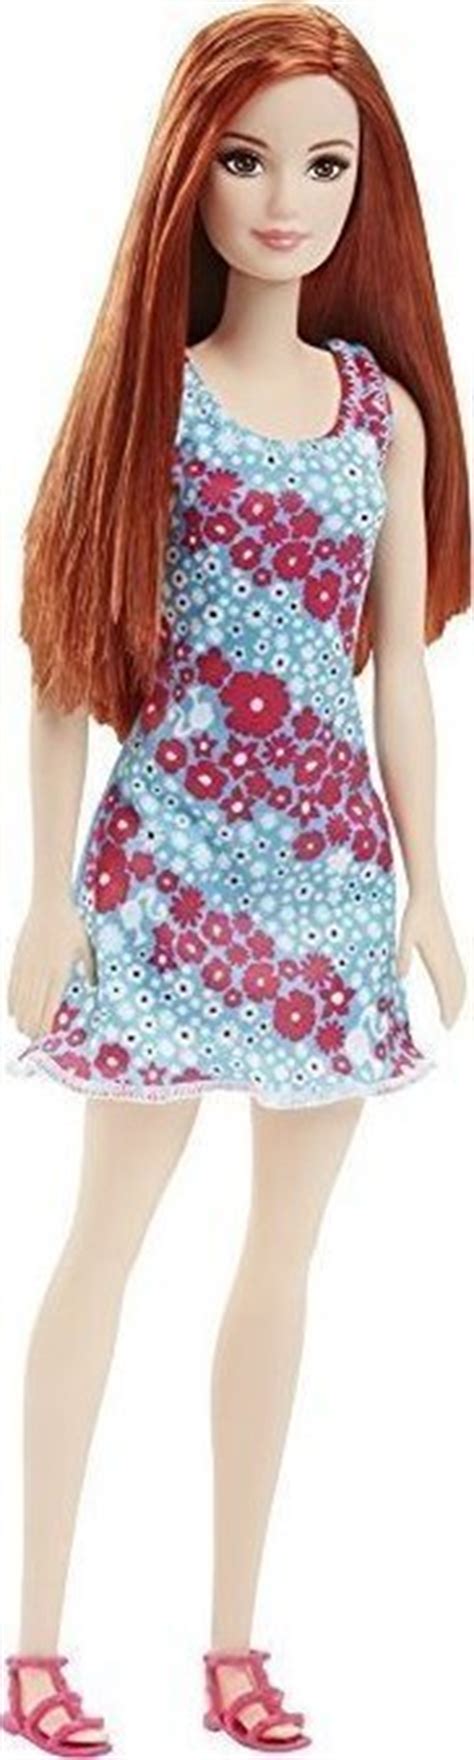 Barbie Doll Red Hair Skroutzgr